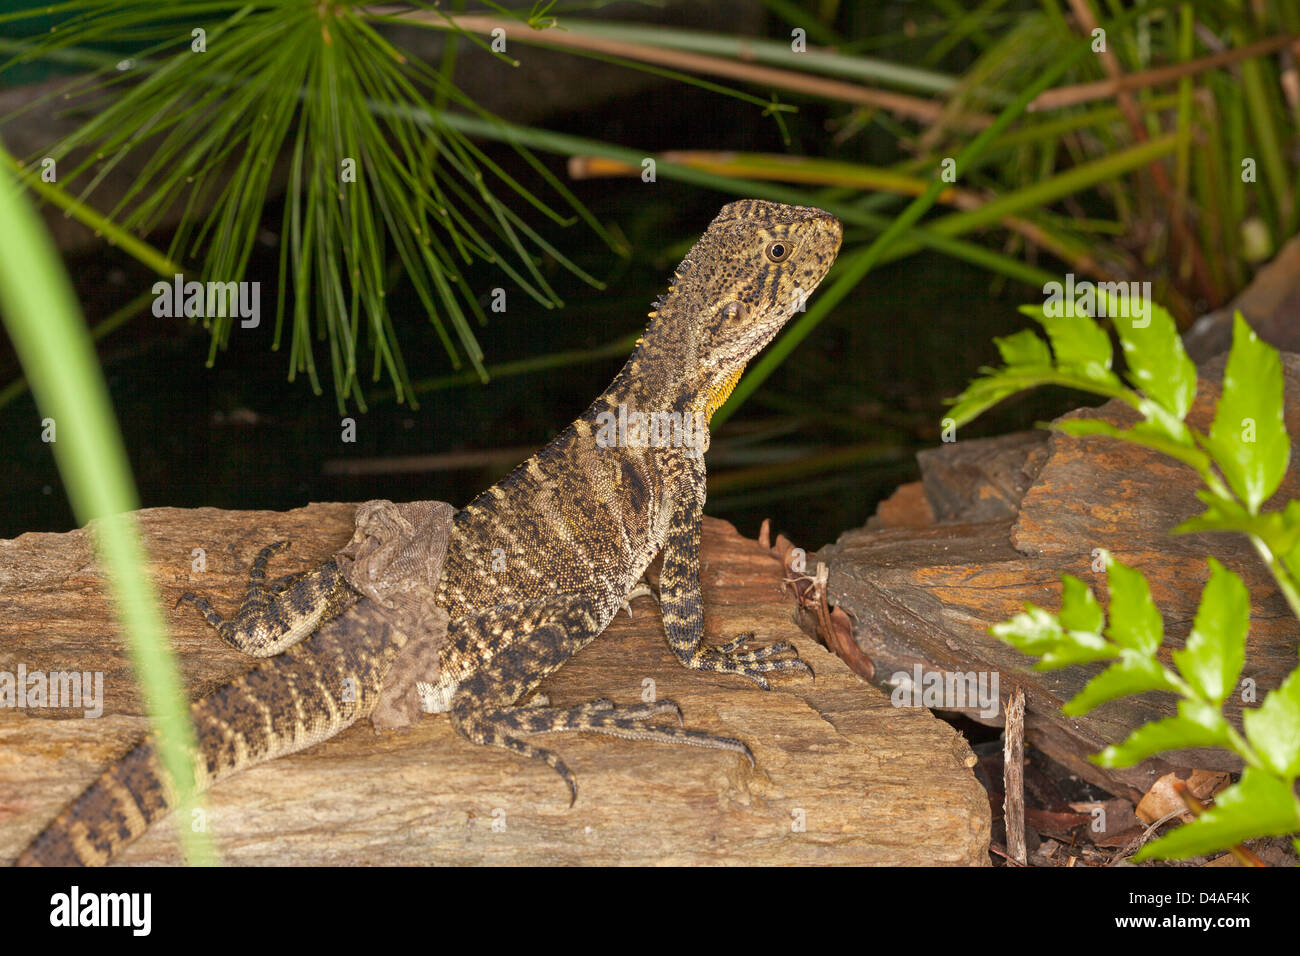 Young Australian eastern water dragon lizard shedding its skin on rock beside pond - shot in the wild Stock Photo